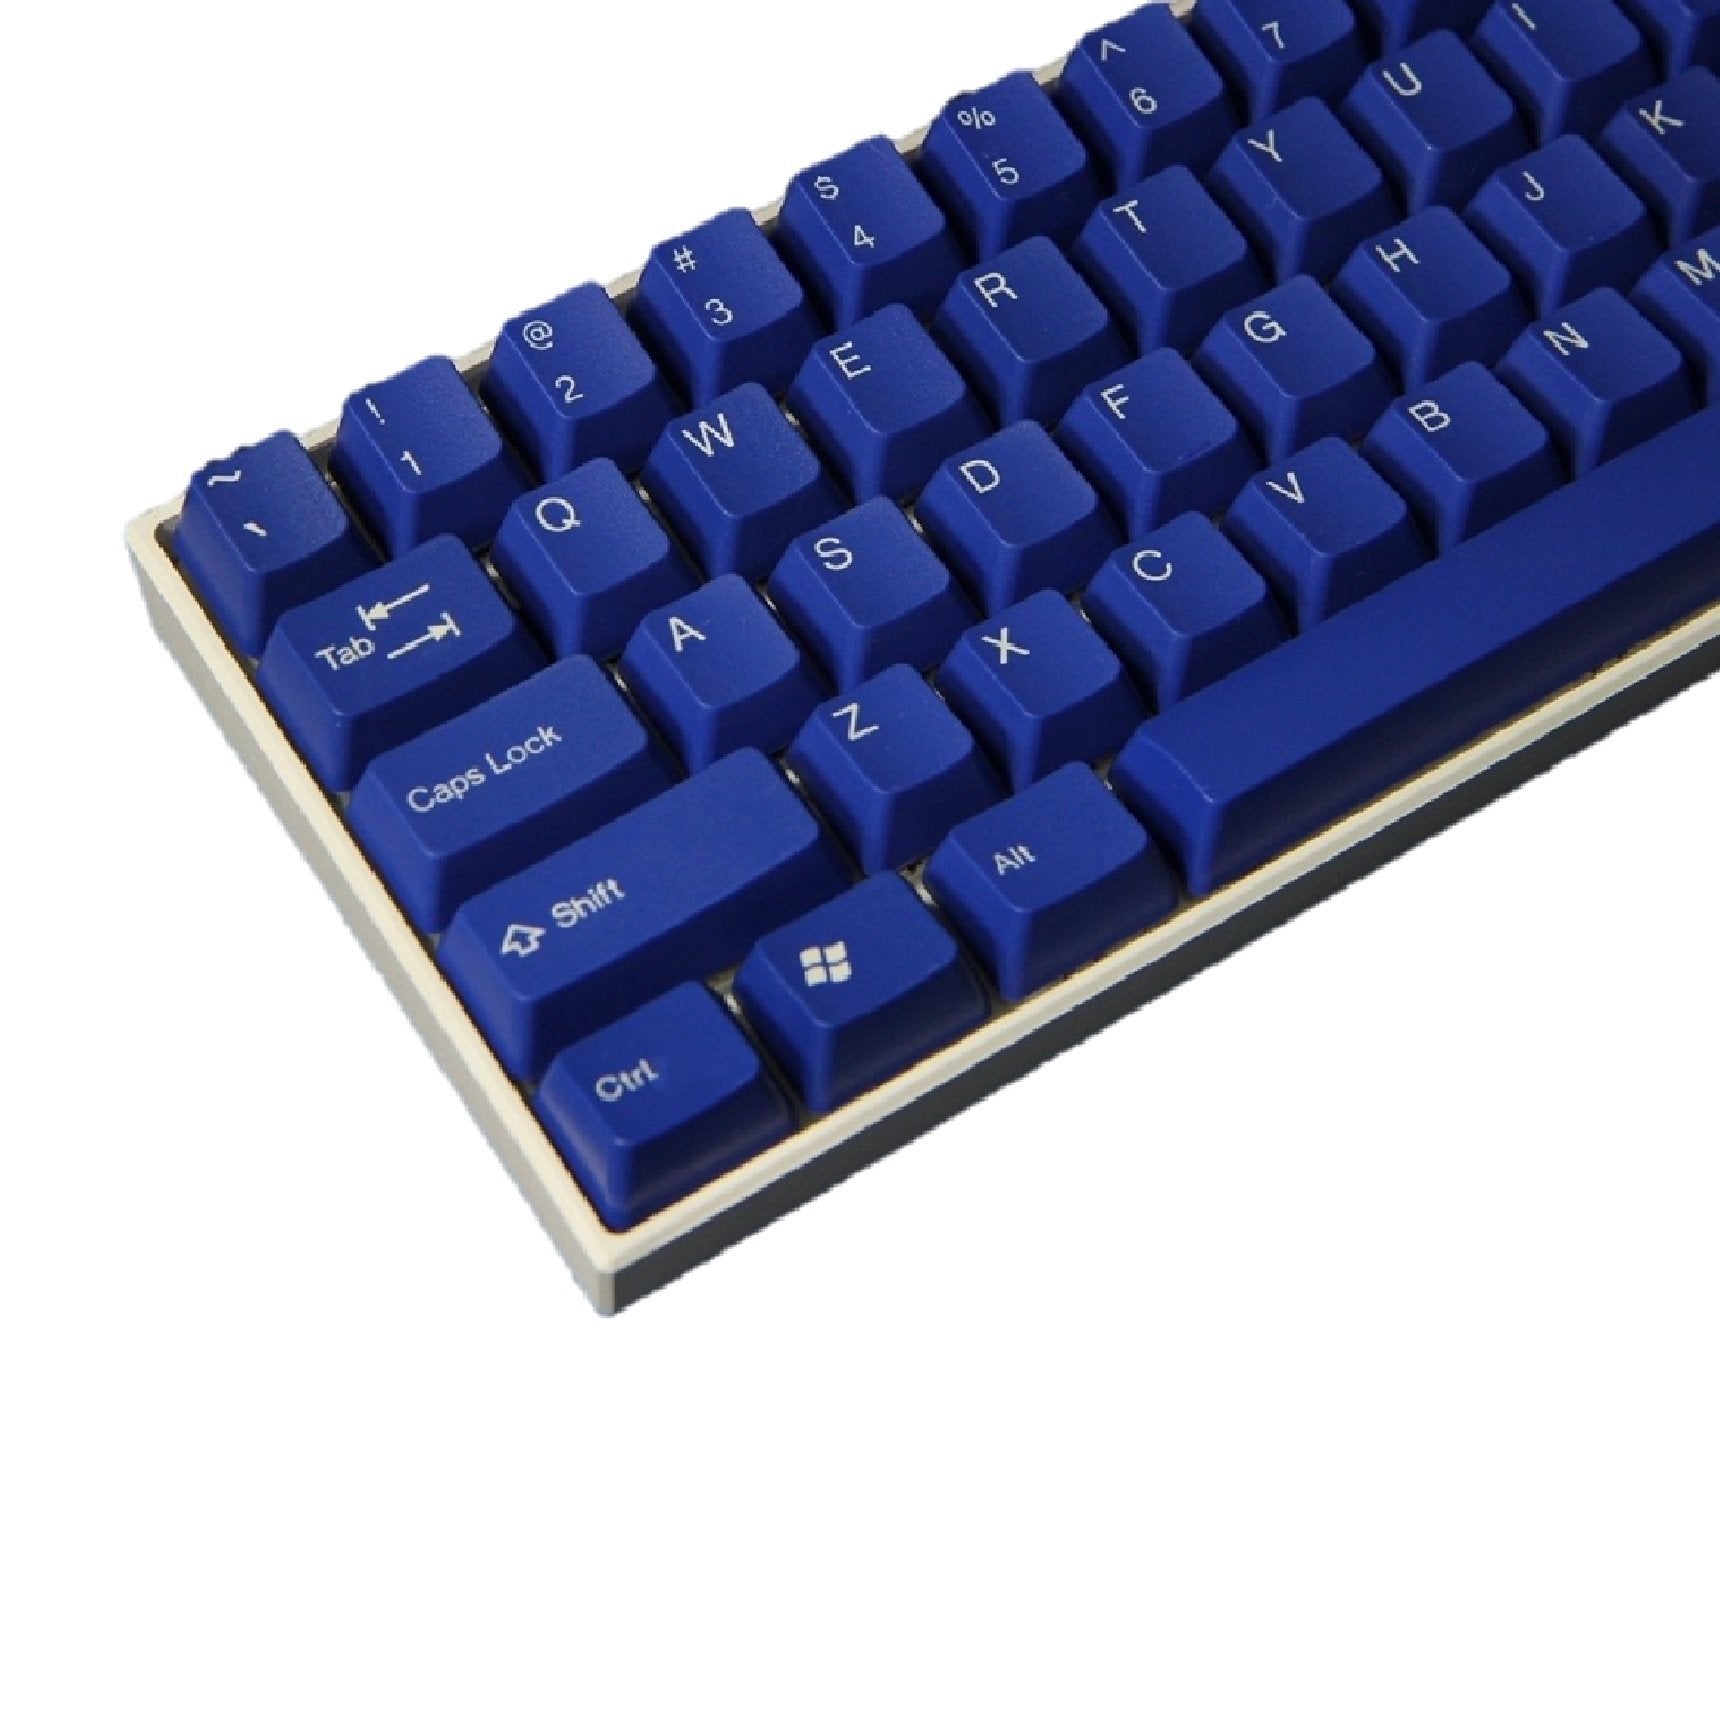 Tai-Hao 104 Keys-Double Shot Keycap + 1 Keys Puller - Blue - Store 974 | ستور ٩٧٤